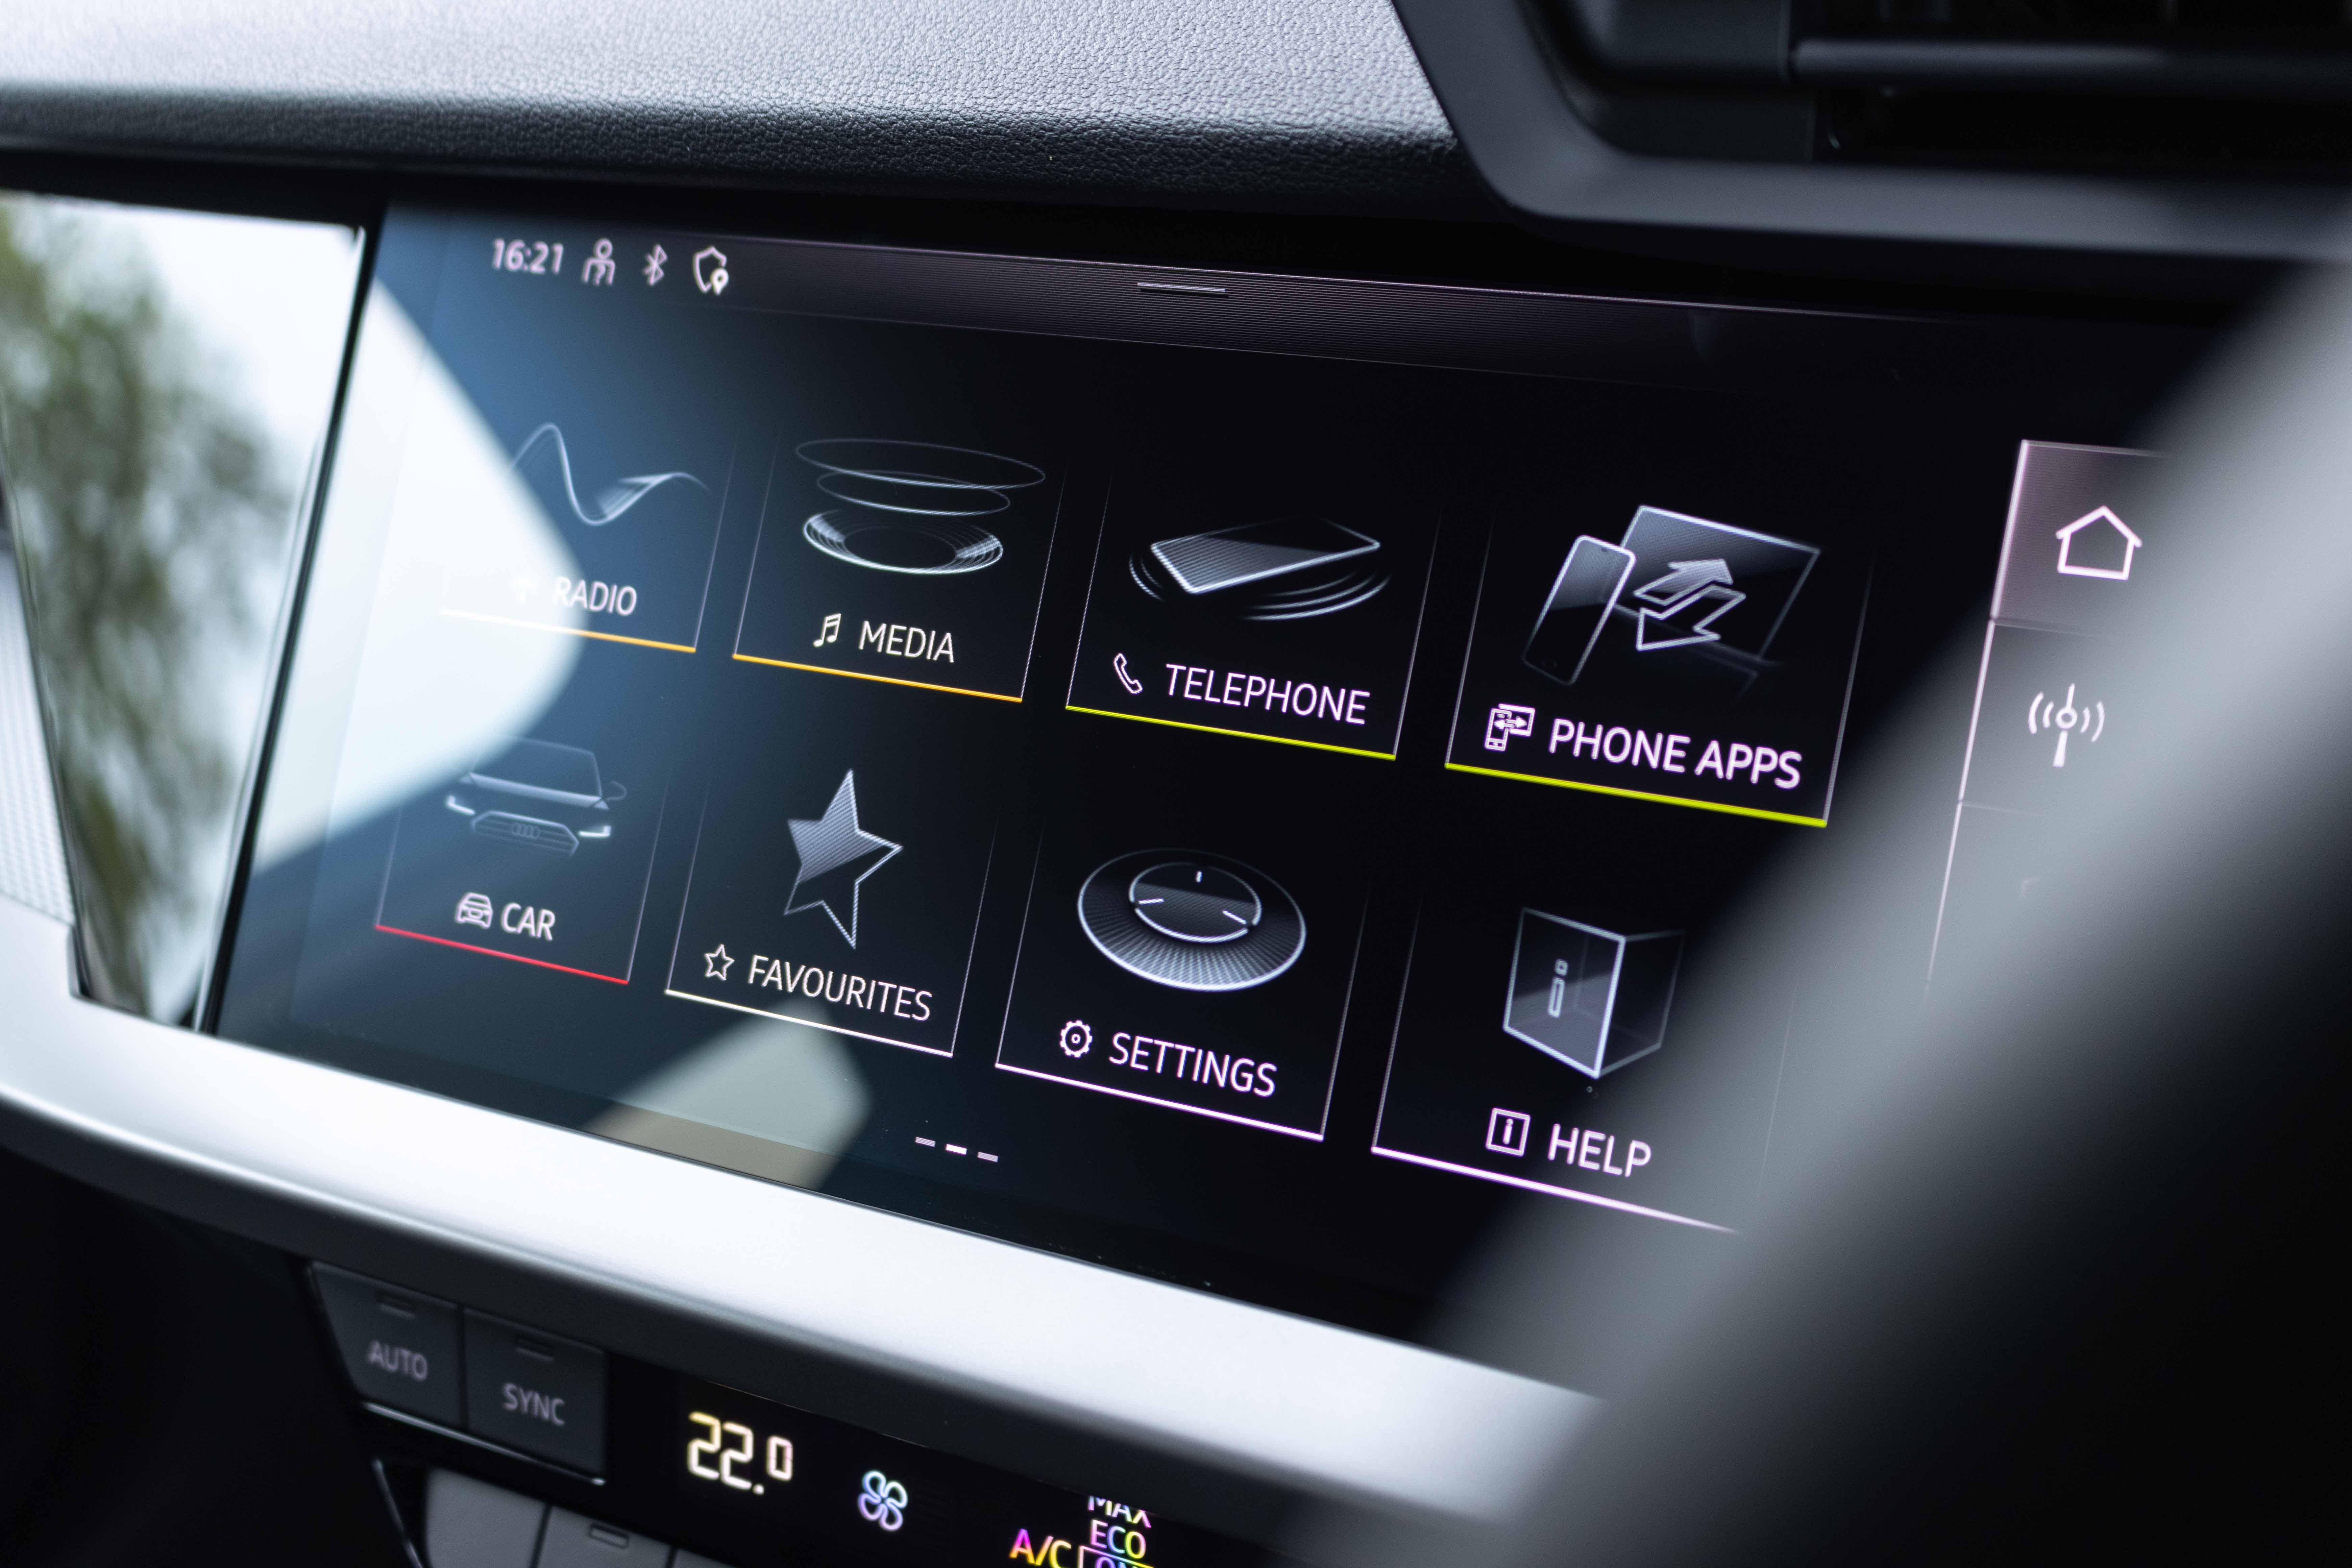 2022 Audi A3 Sportback 1.0 TFSI S tronic Singapore - Infotainment screen